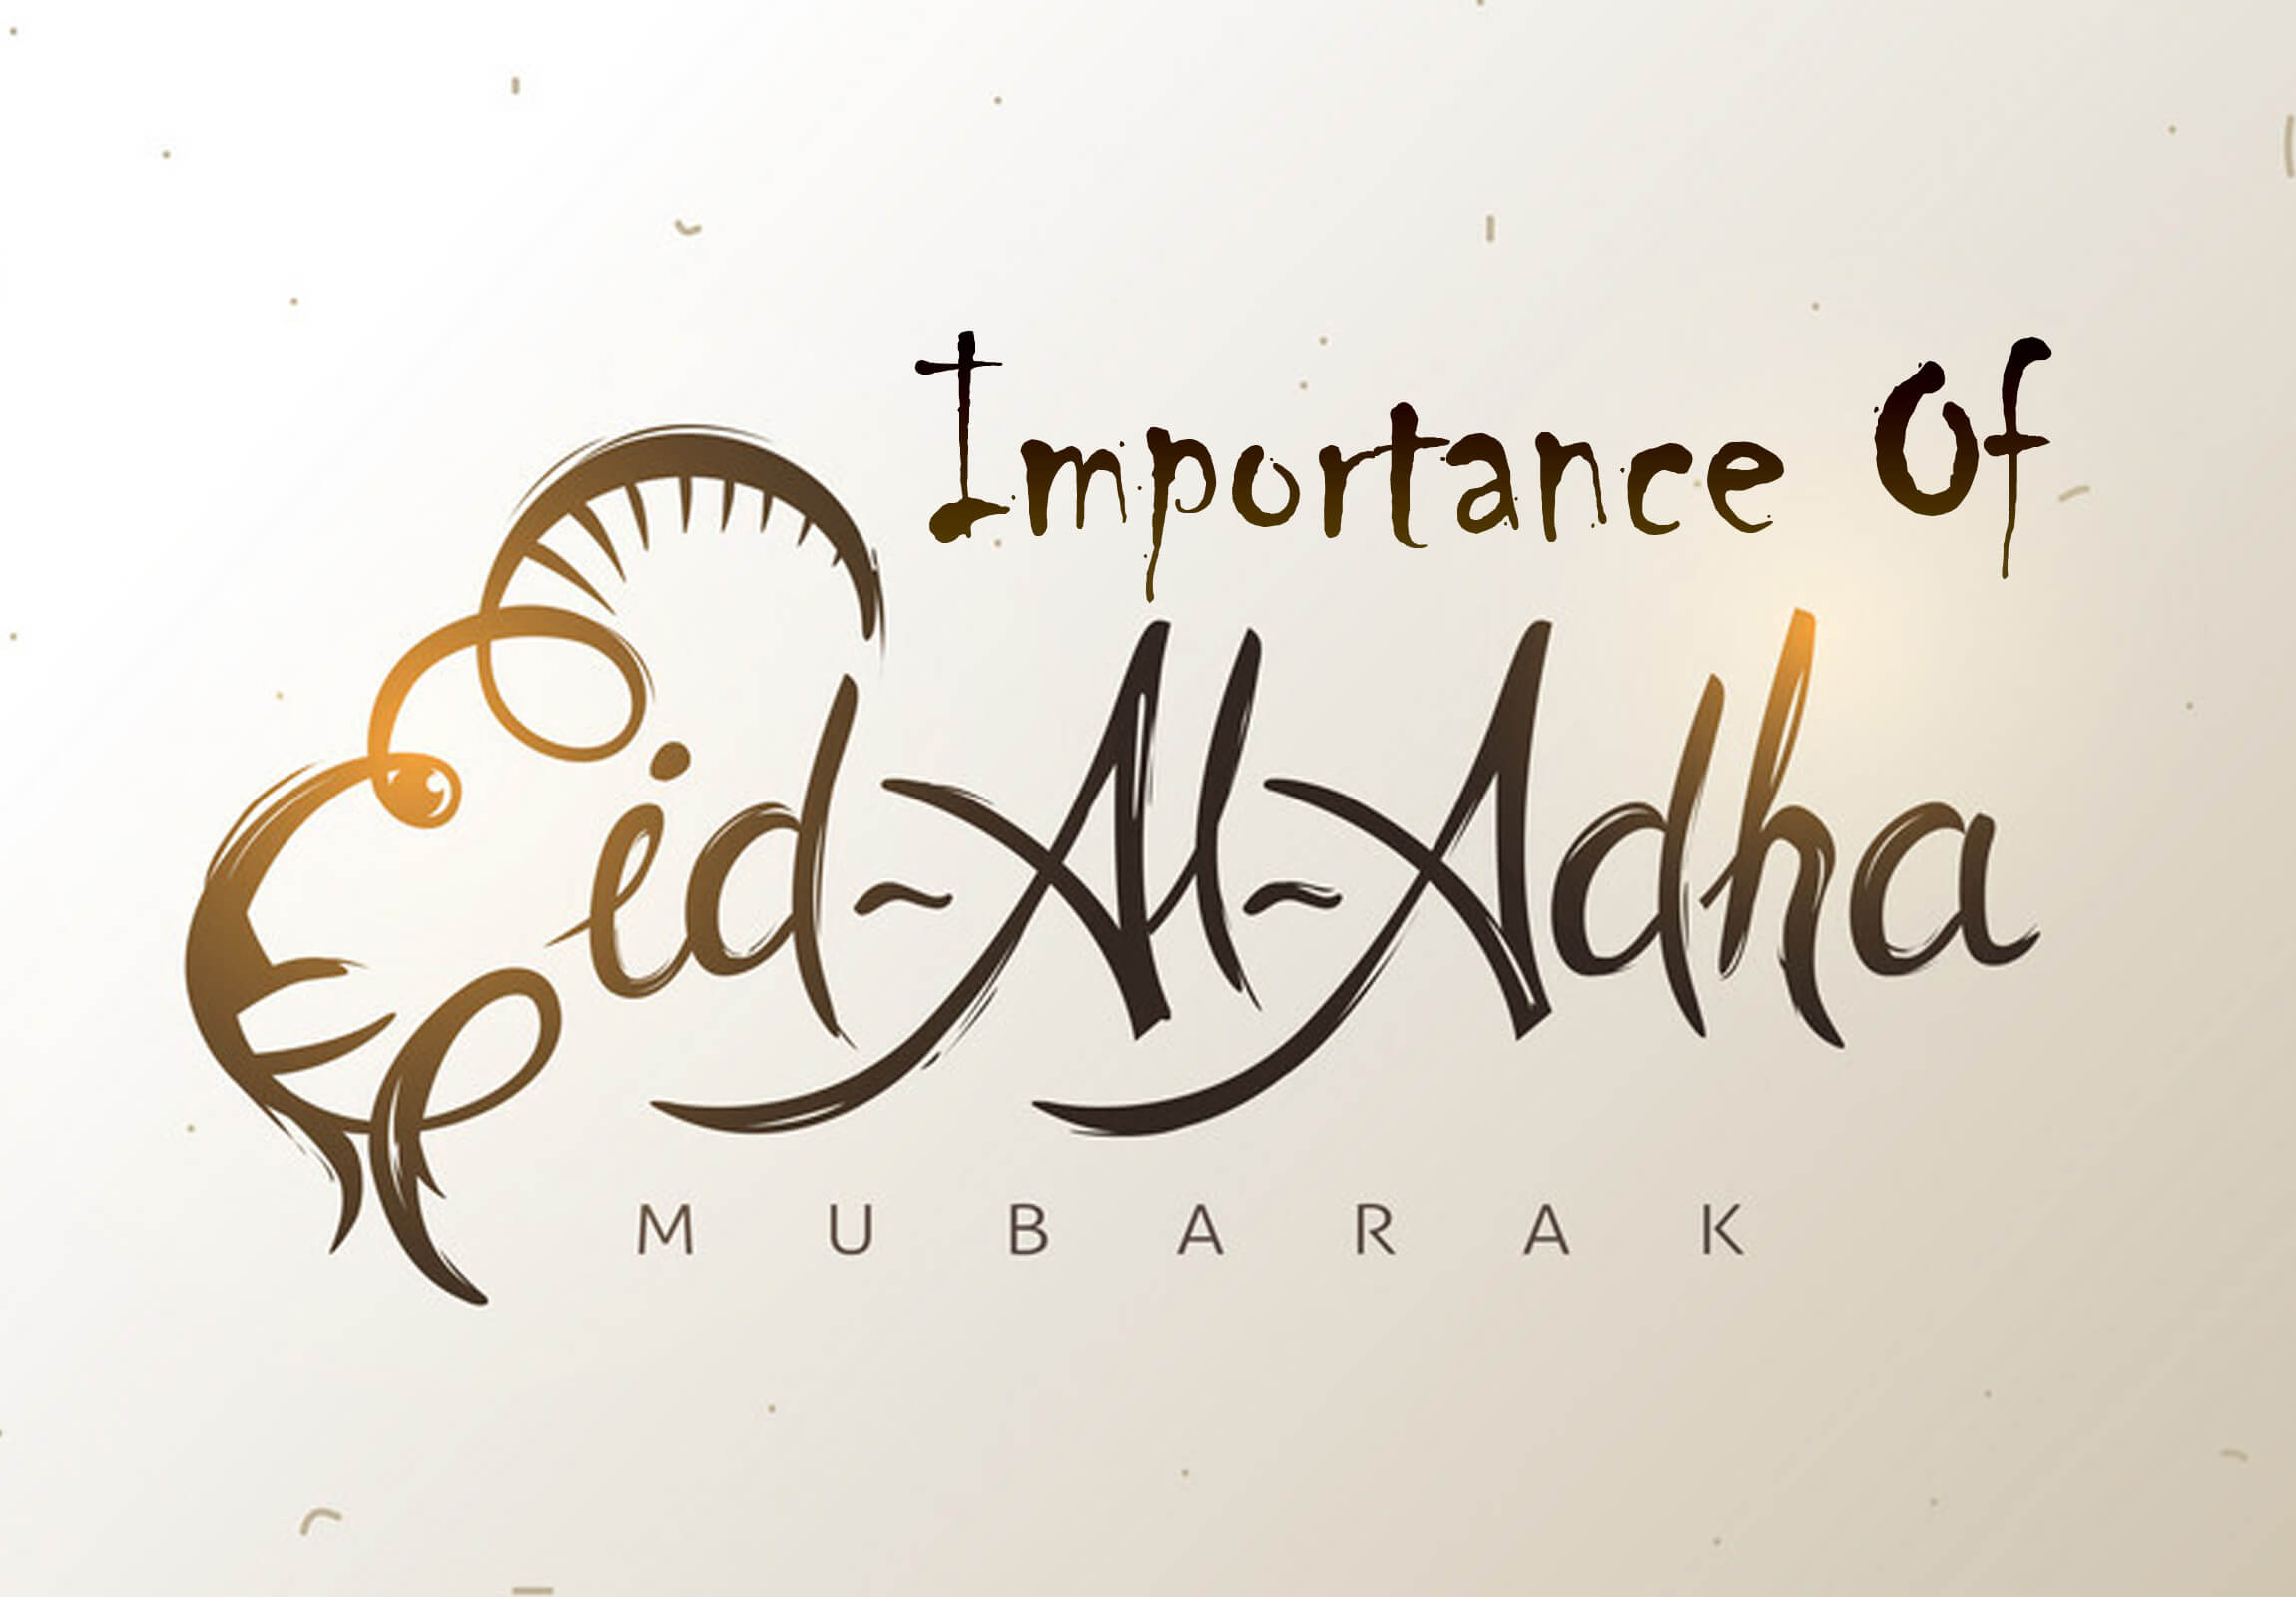 beautiful vector illustration image of eid al adha importance text